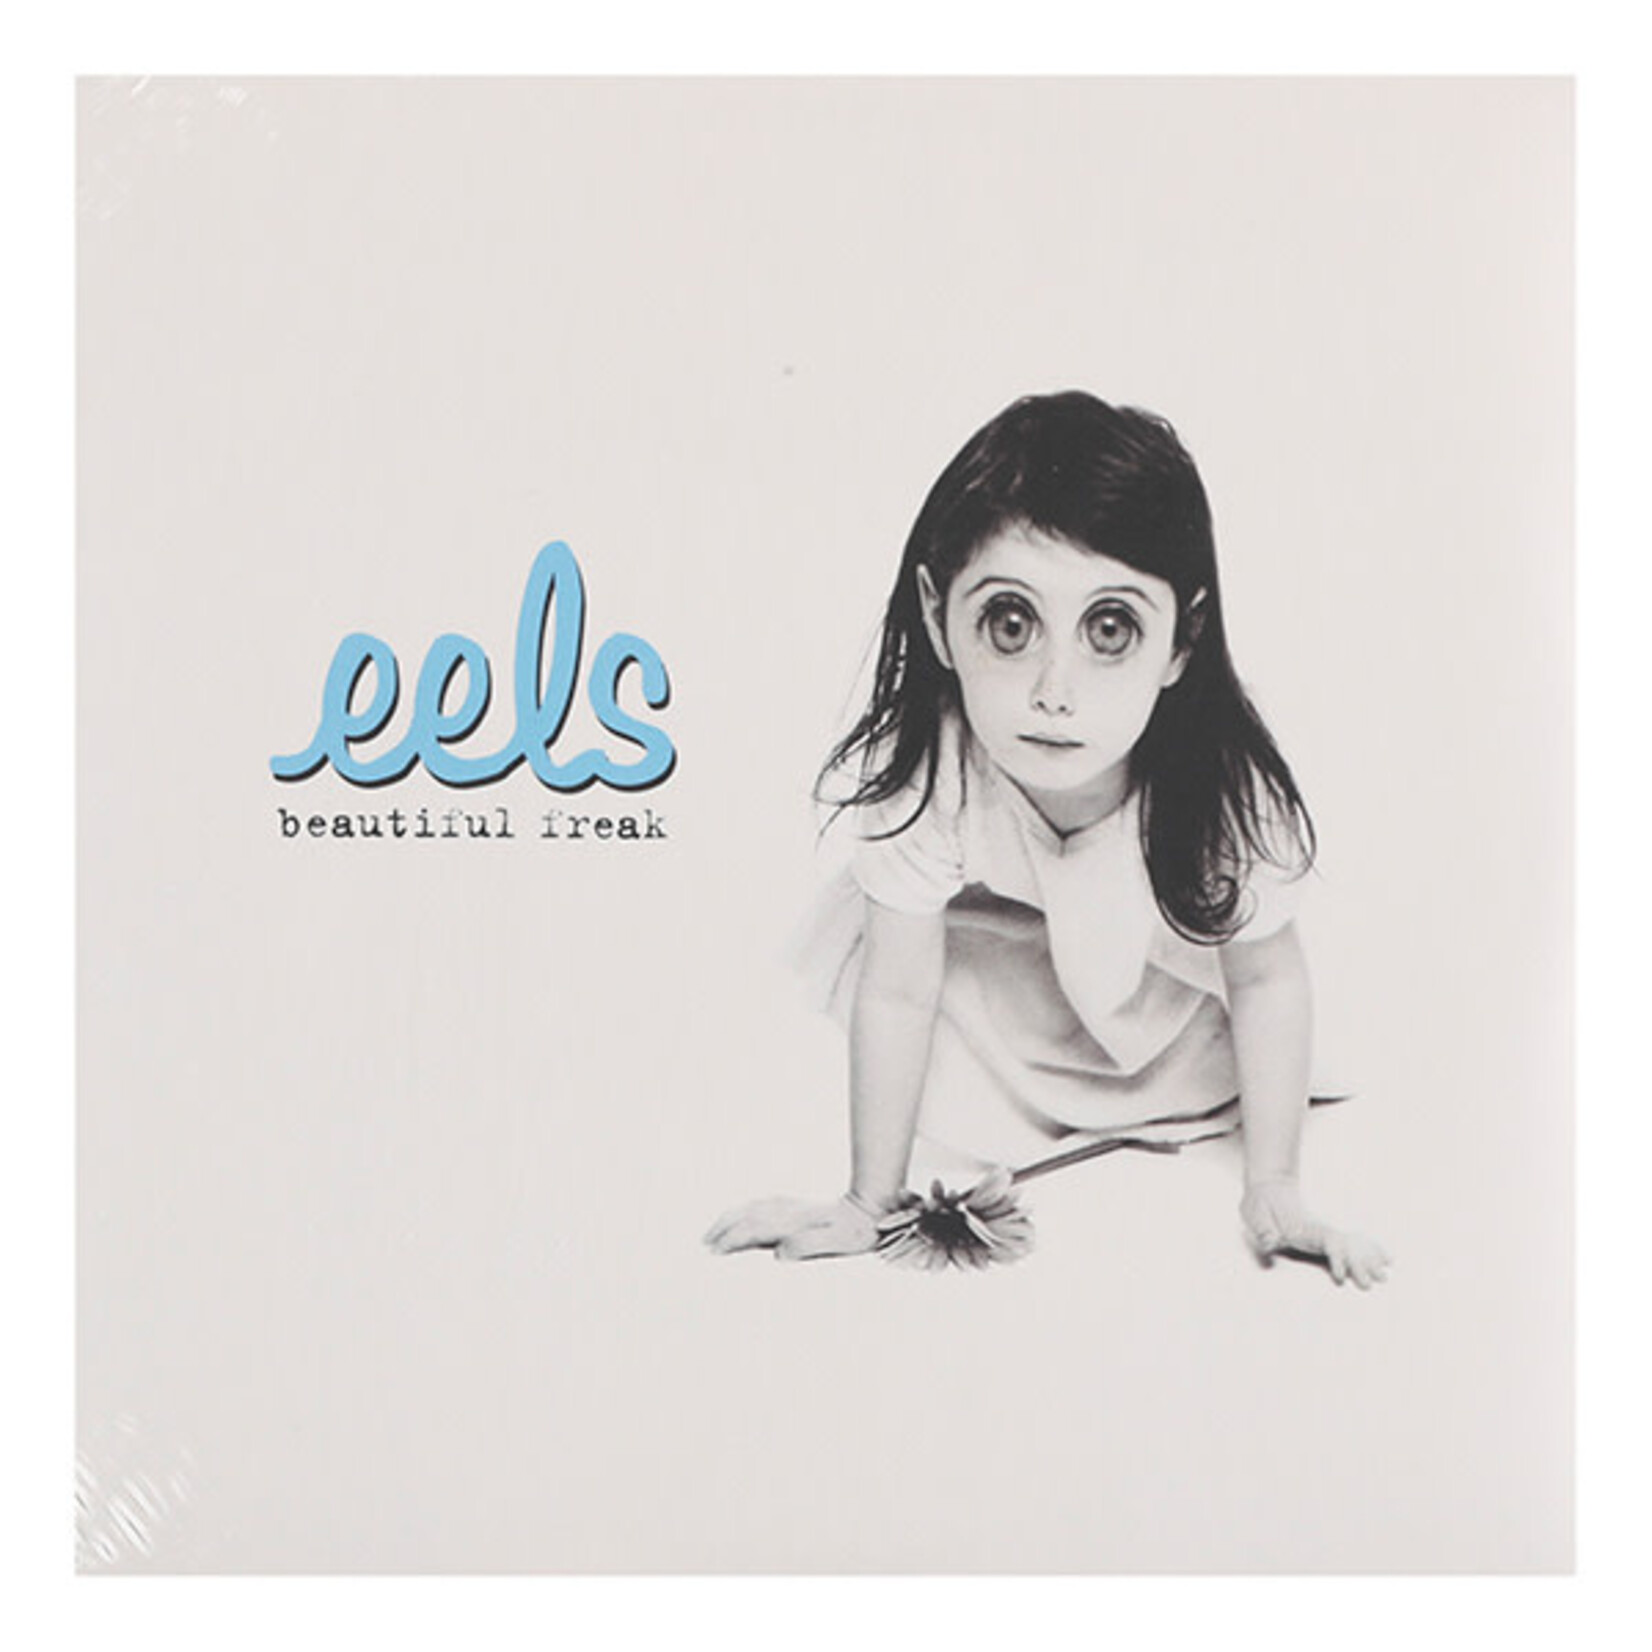 EELS - BEAUTIFUL FREAK - LP